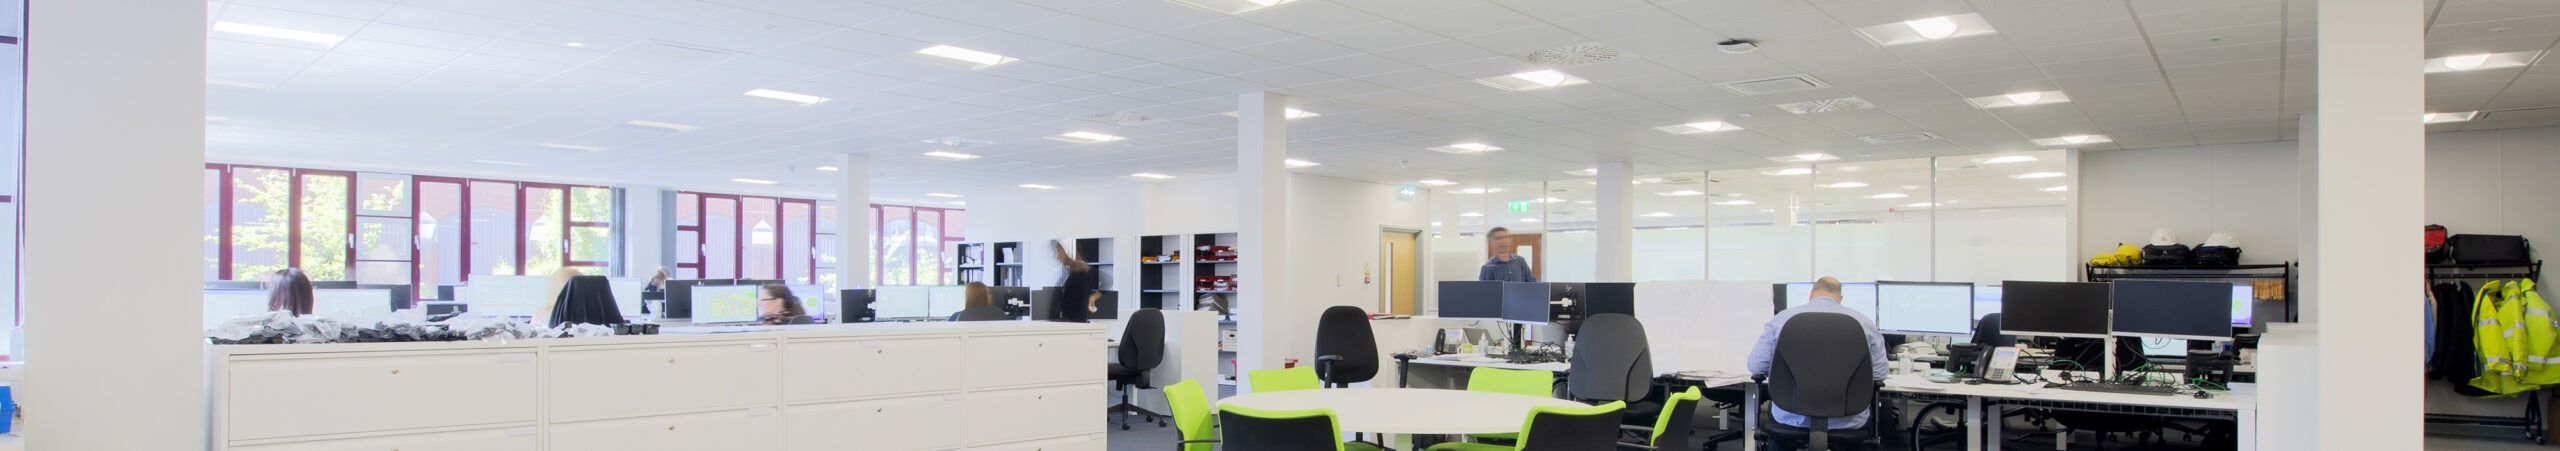 Tamlite Sandwell Council House Oldbury Emergency LED Lighting Case Study header office image